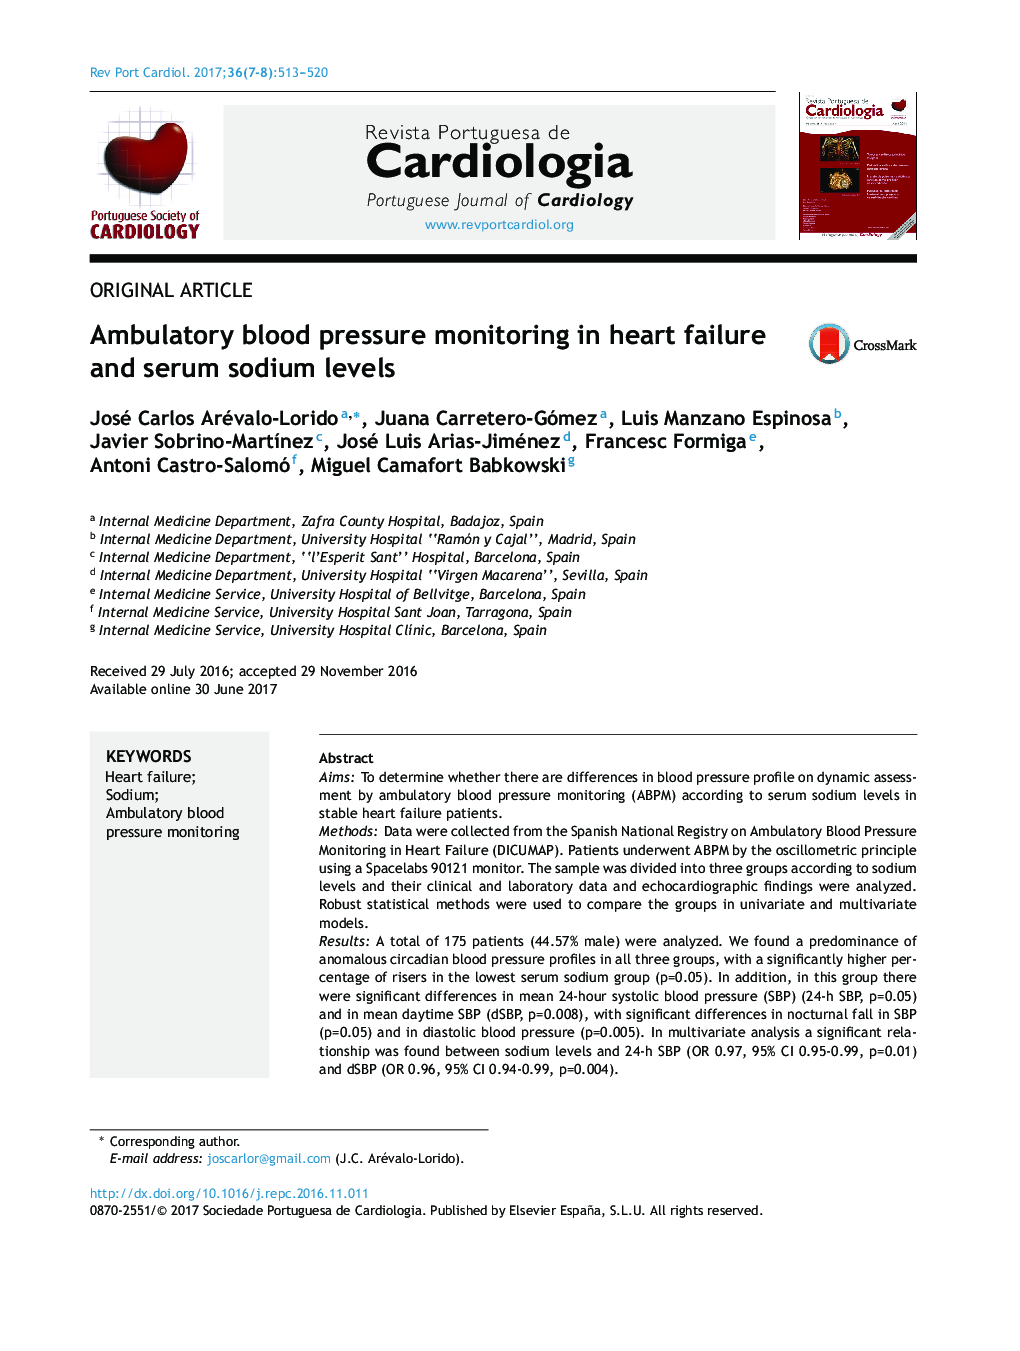 Ambulatory blood pressure monitoring in heart failure and serum sodium levels